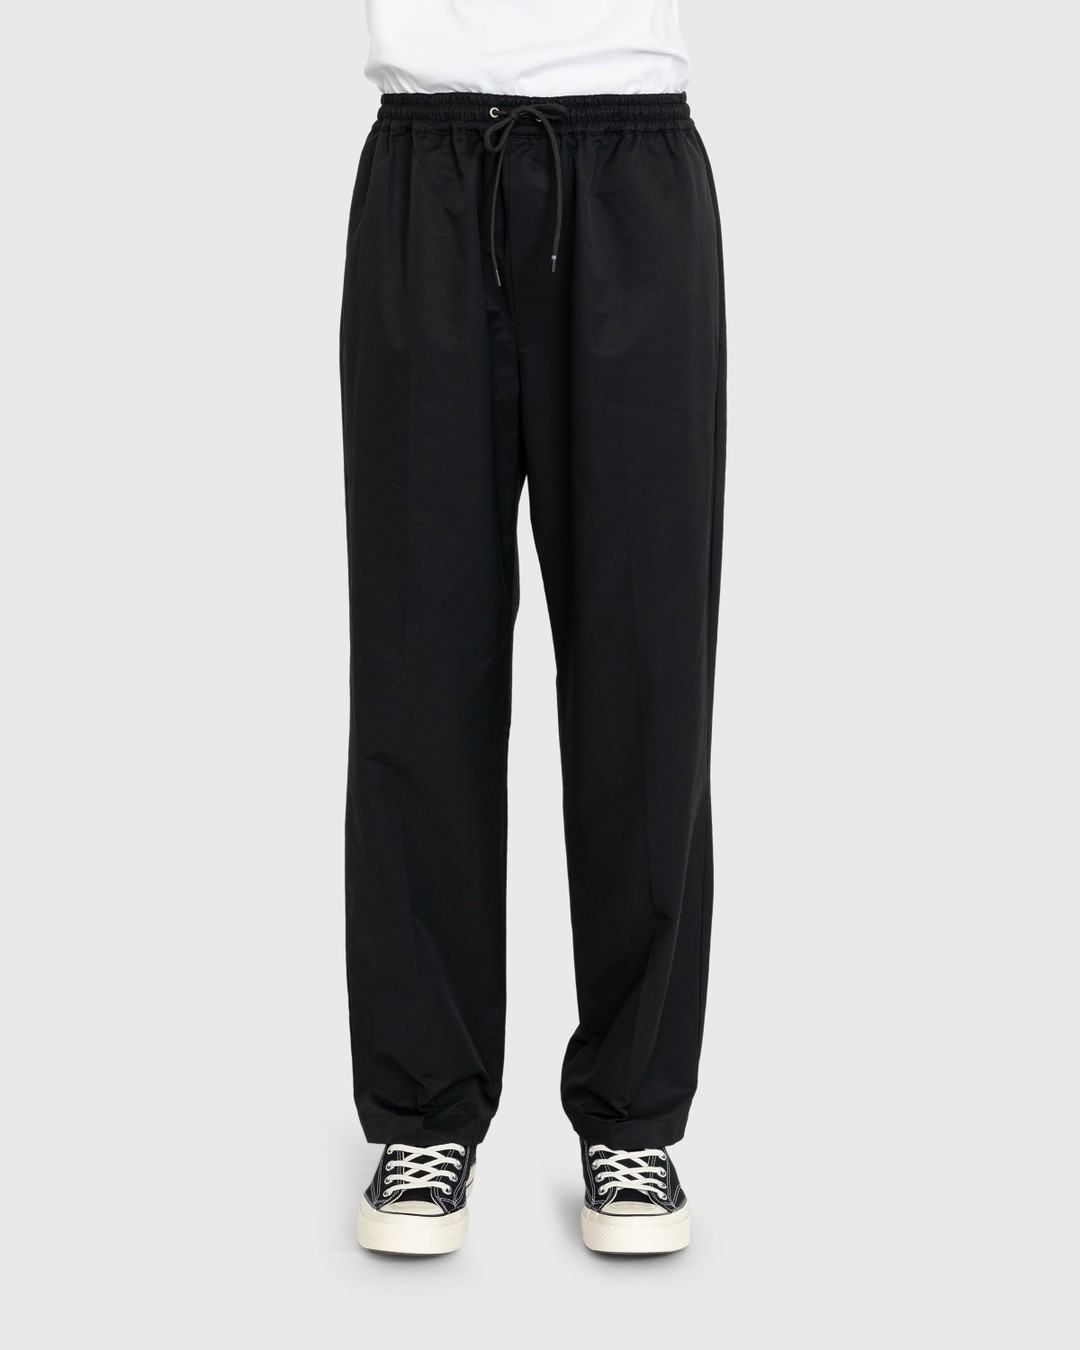 Highsnobiety – Cotton Nylon Elastic Pants Black - Pants - Black - Image 2